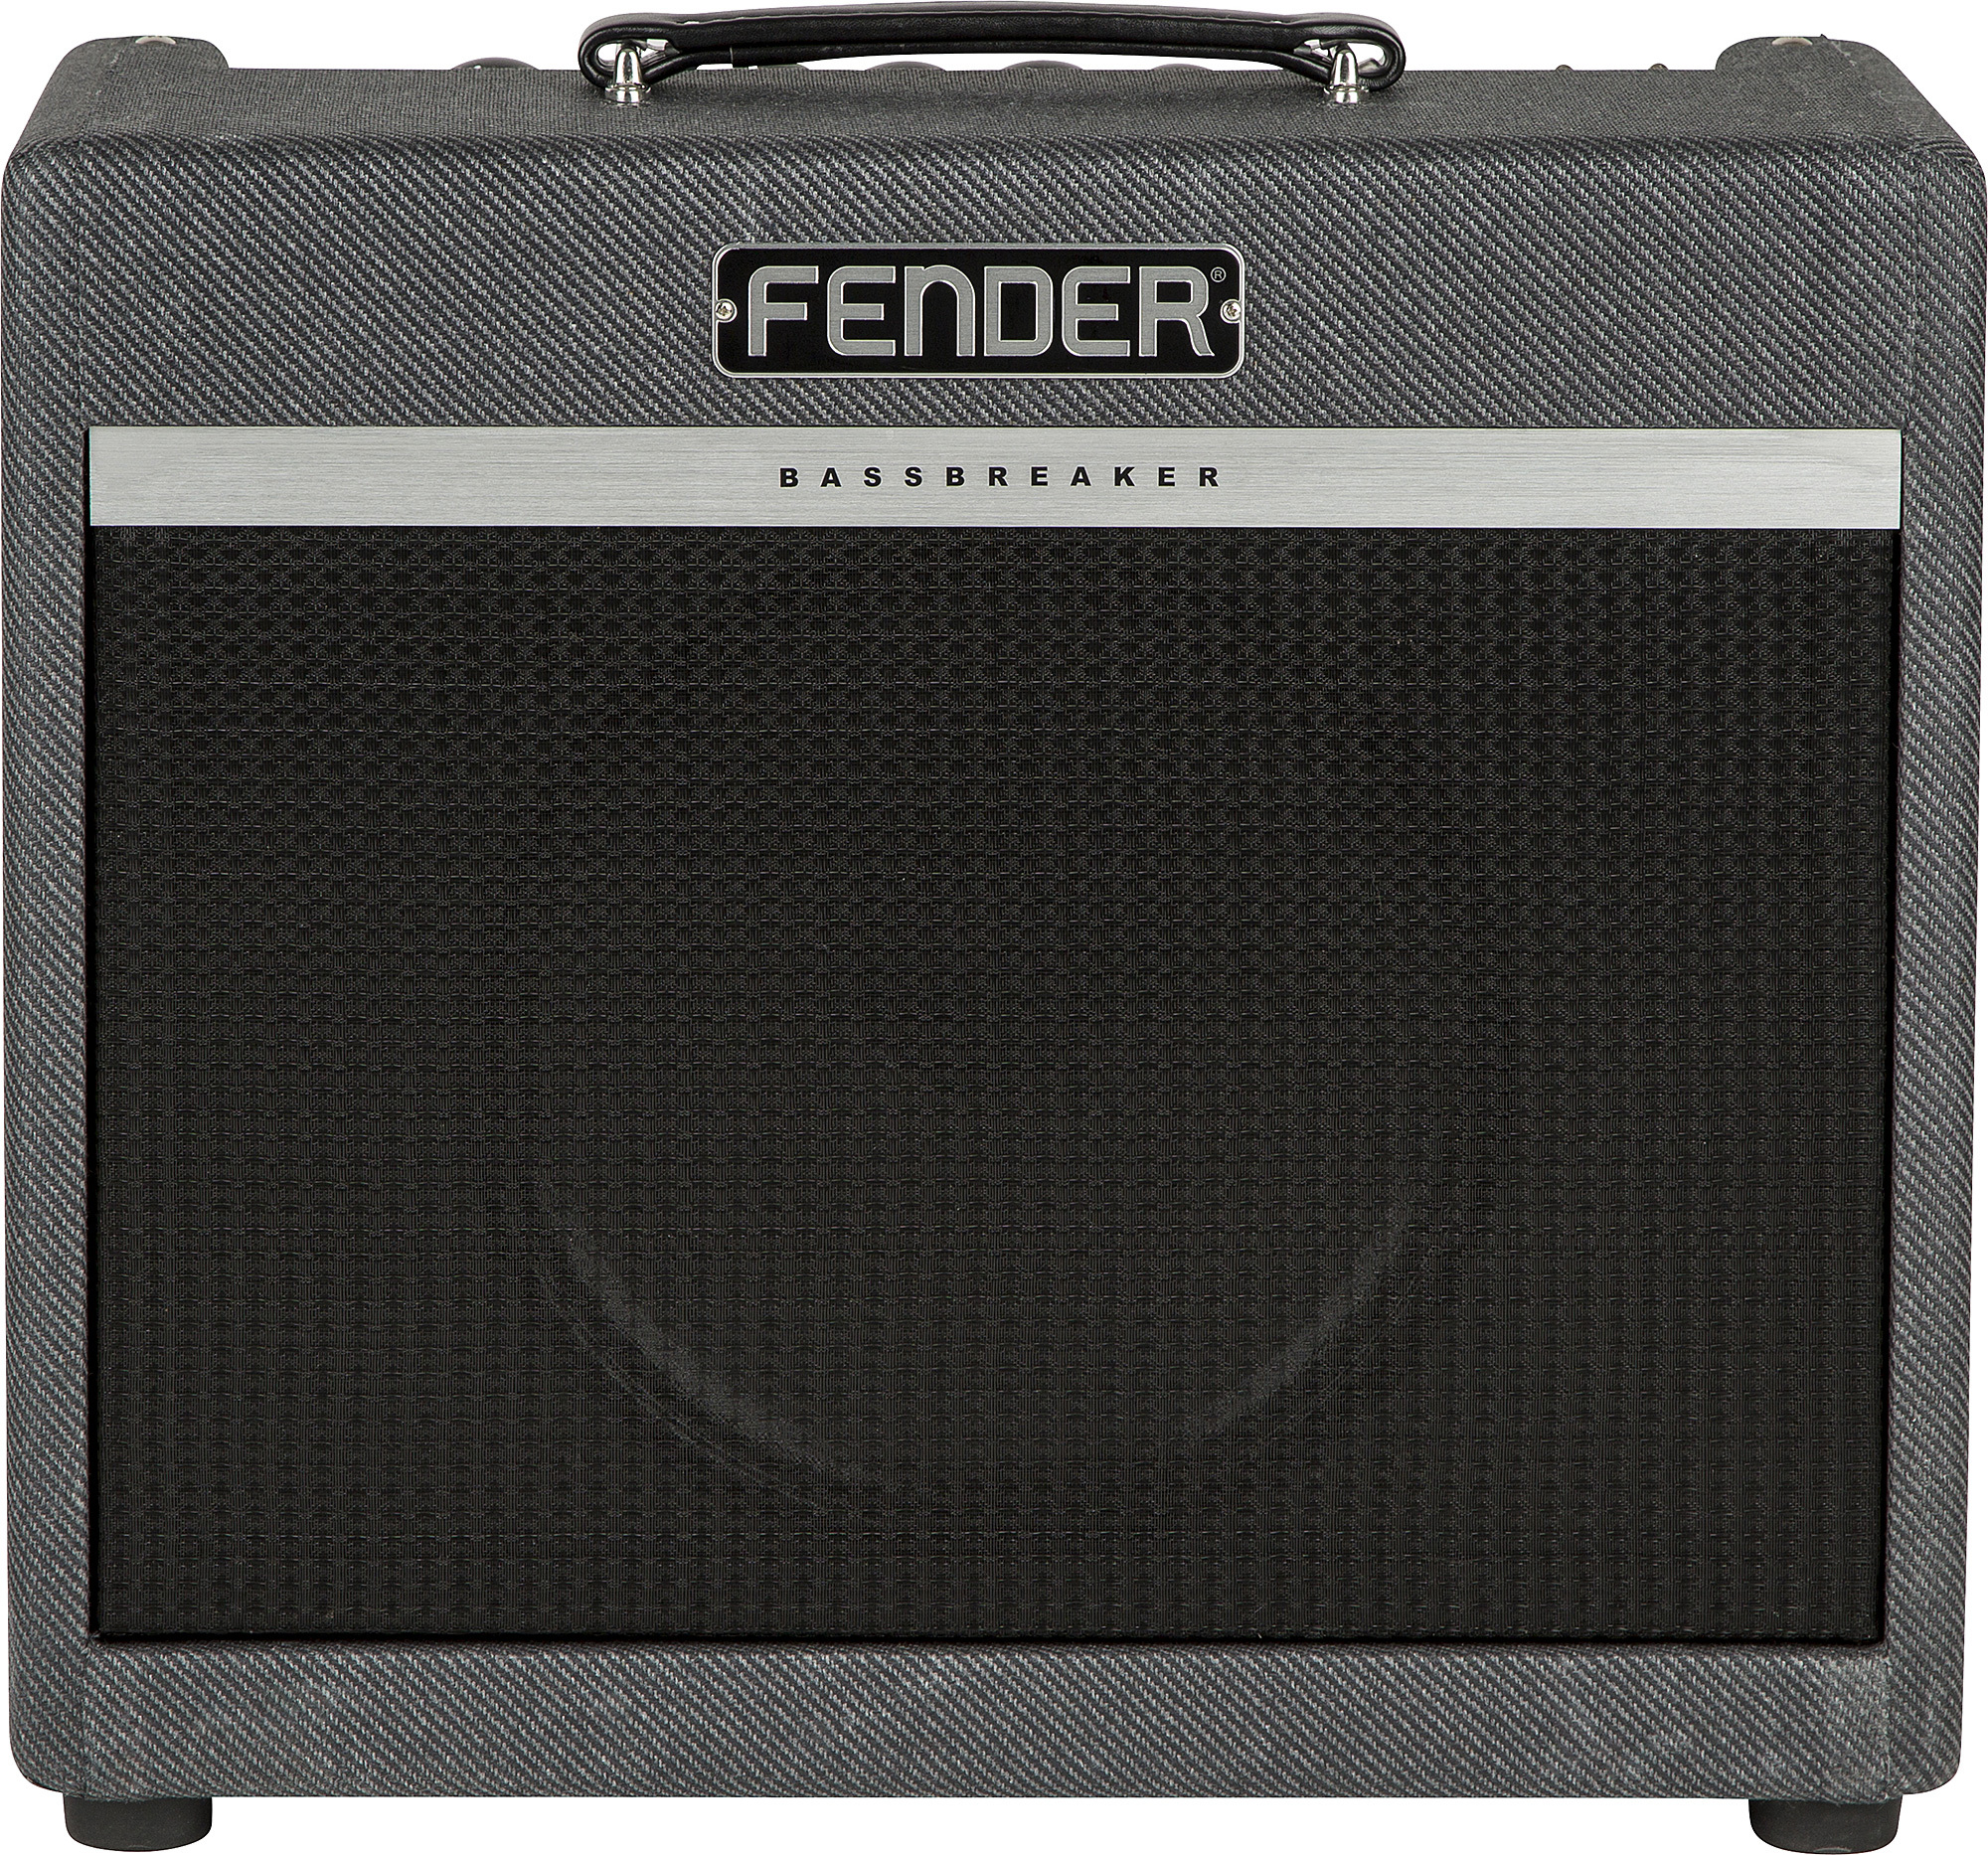 Fender Bassbreaker 15 Combo 15w 1x12 Gray Tweed - Combo amplificador para guitarra eléctrica - Main picture